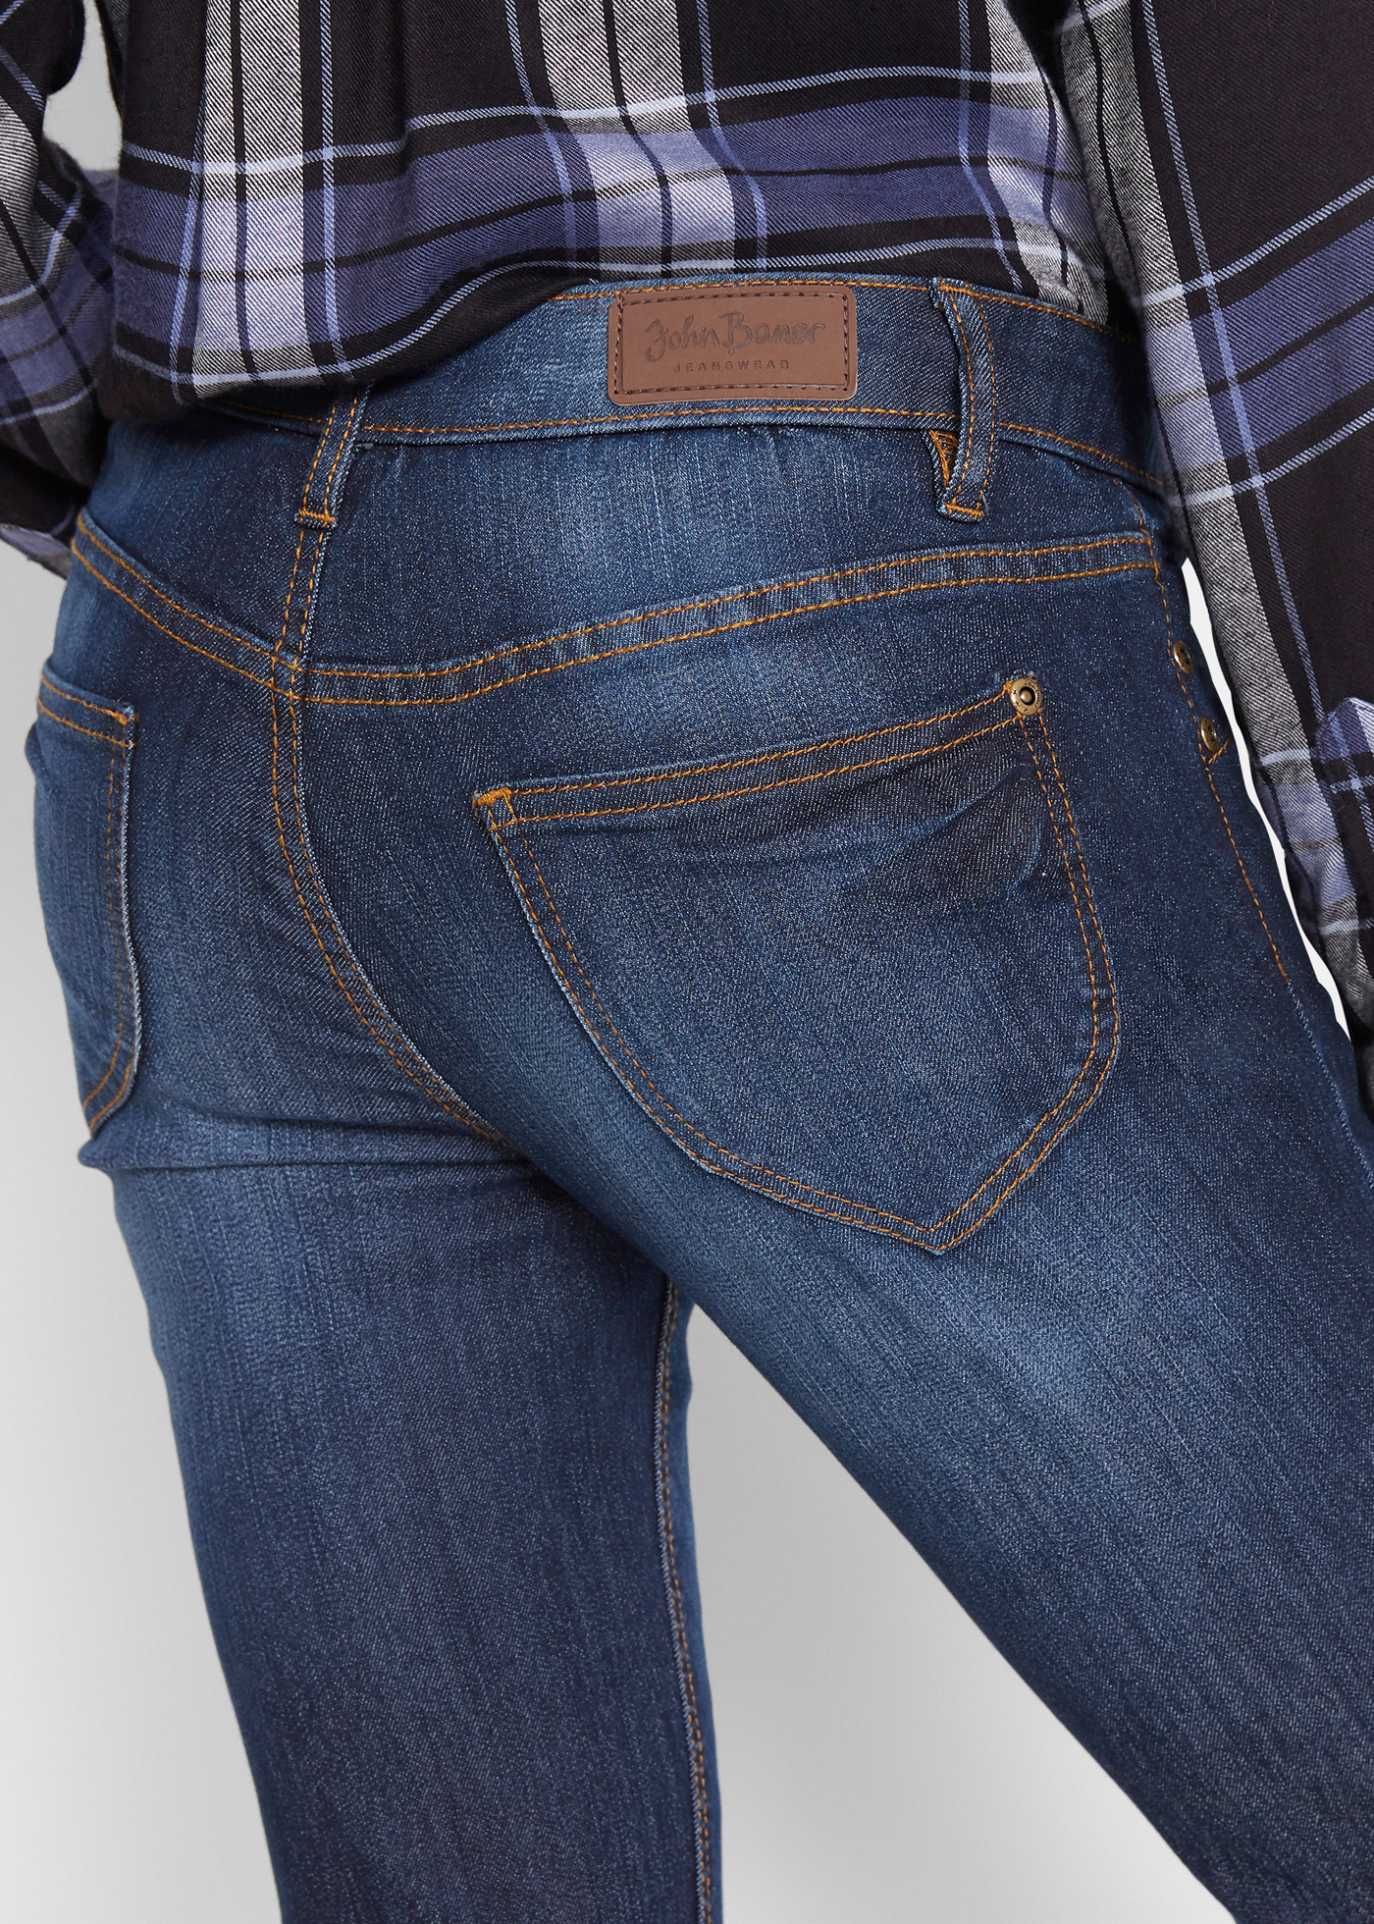 CROSS Damen Stretch Jeans "C-464G-030"  Bootcut  W27; W31  blau  NEU mit Etikett 